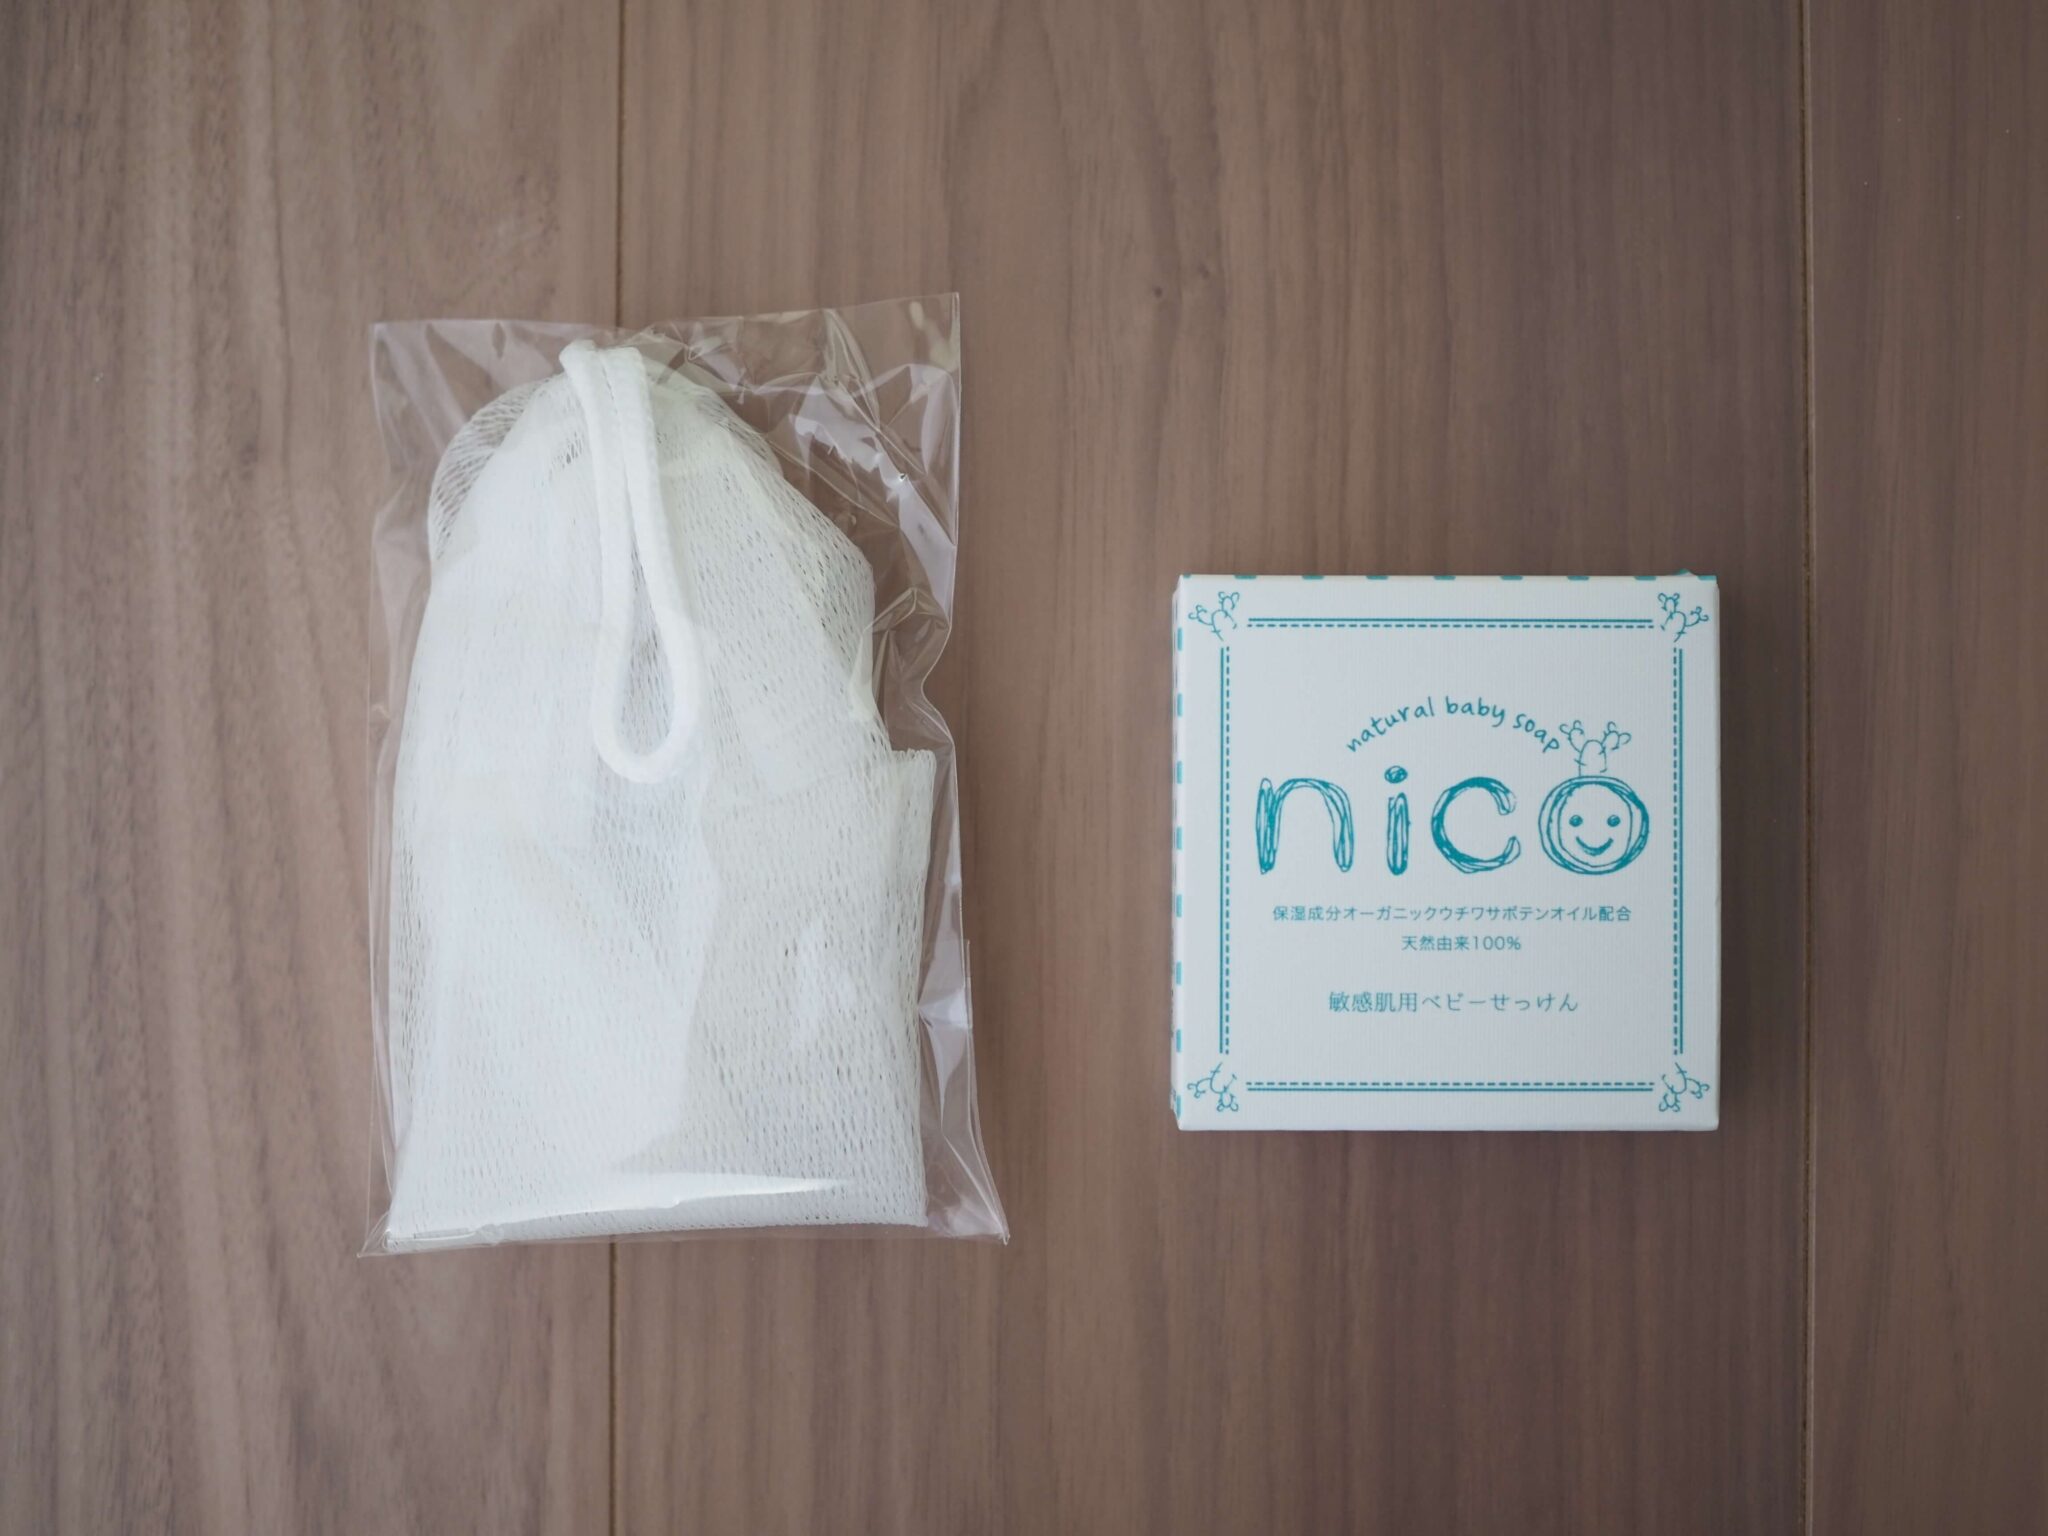 nico石鹸 6個セット+spbgp44.ru